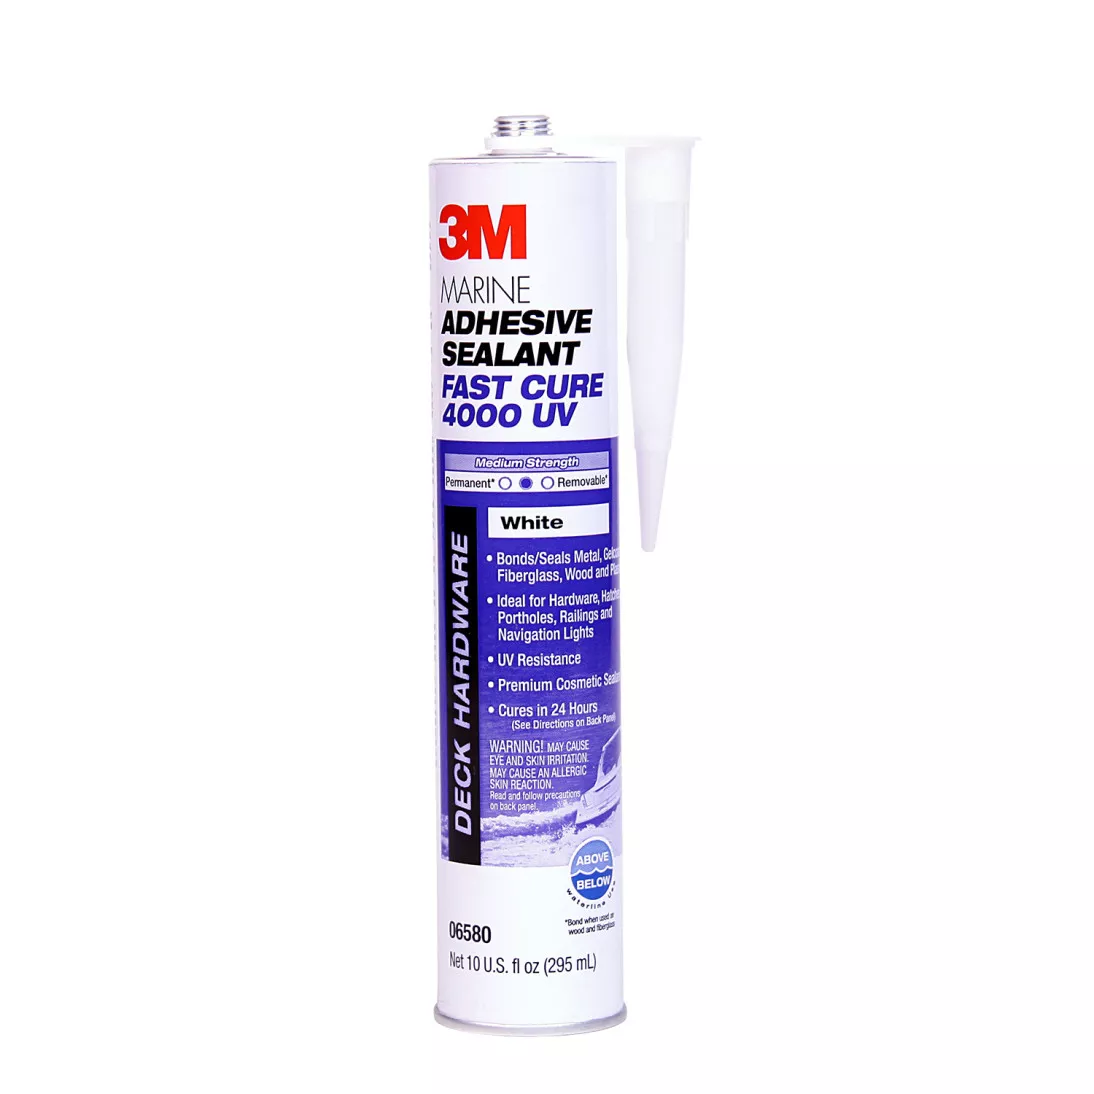 3M™ Marine Adhesive Sealant 4000 UV, PN06580, White, 295 mL Cartridge,
12/Case